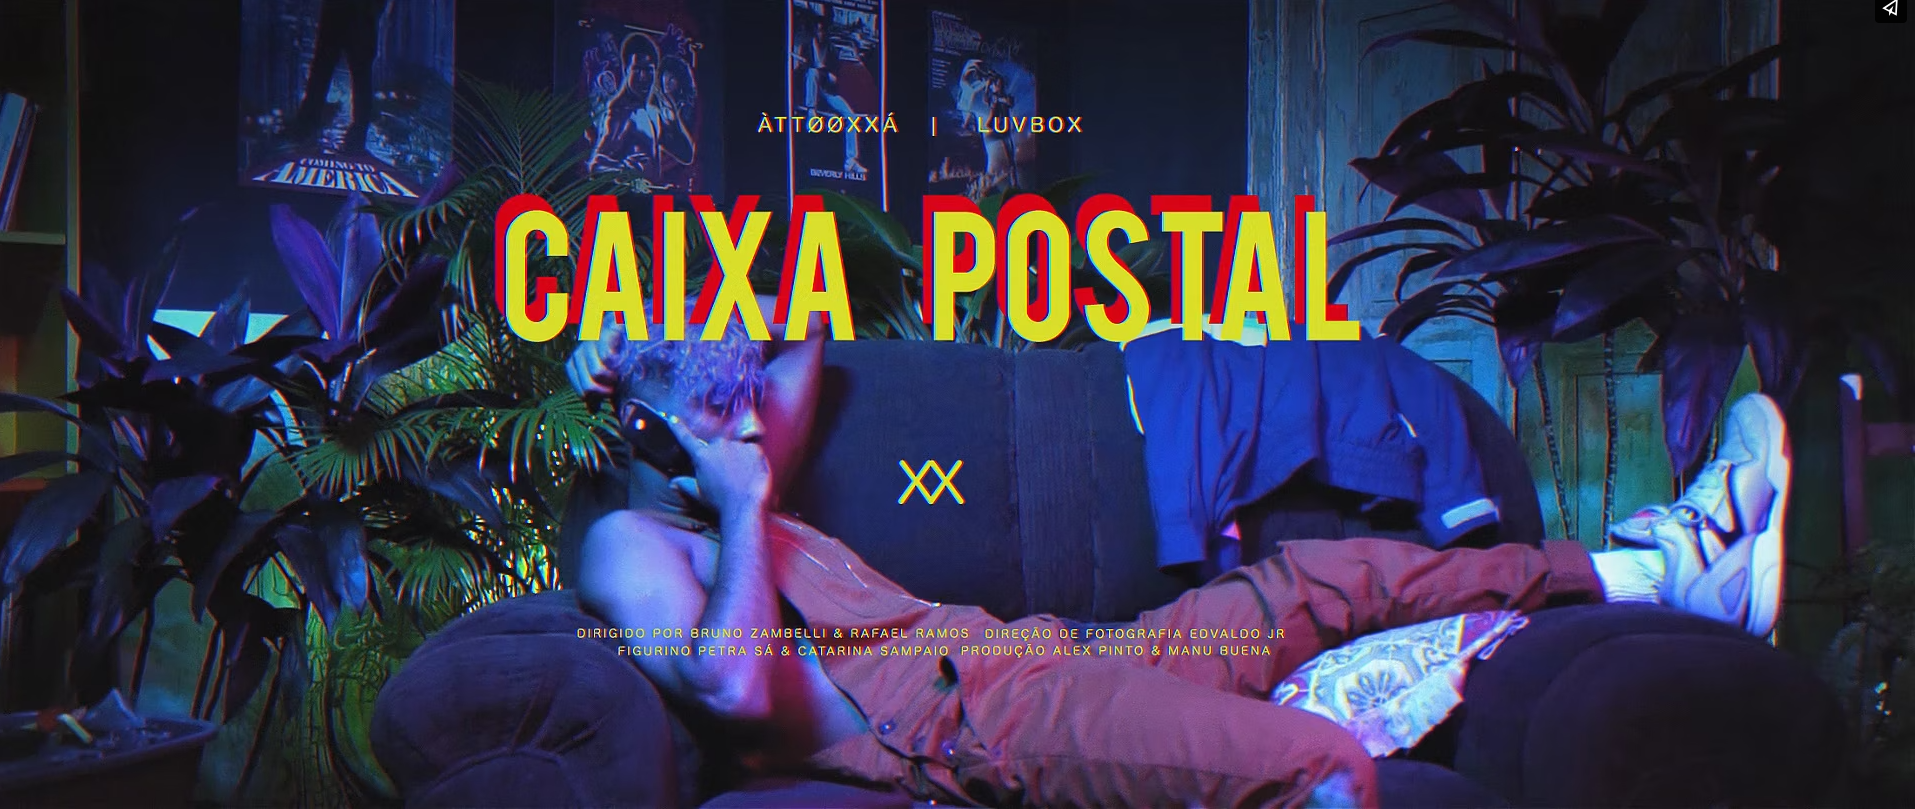 Caixa Postal (Music Video)